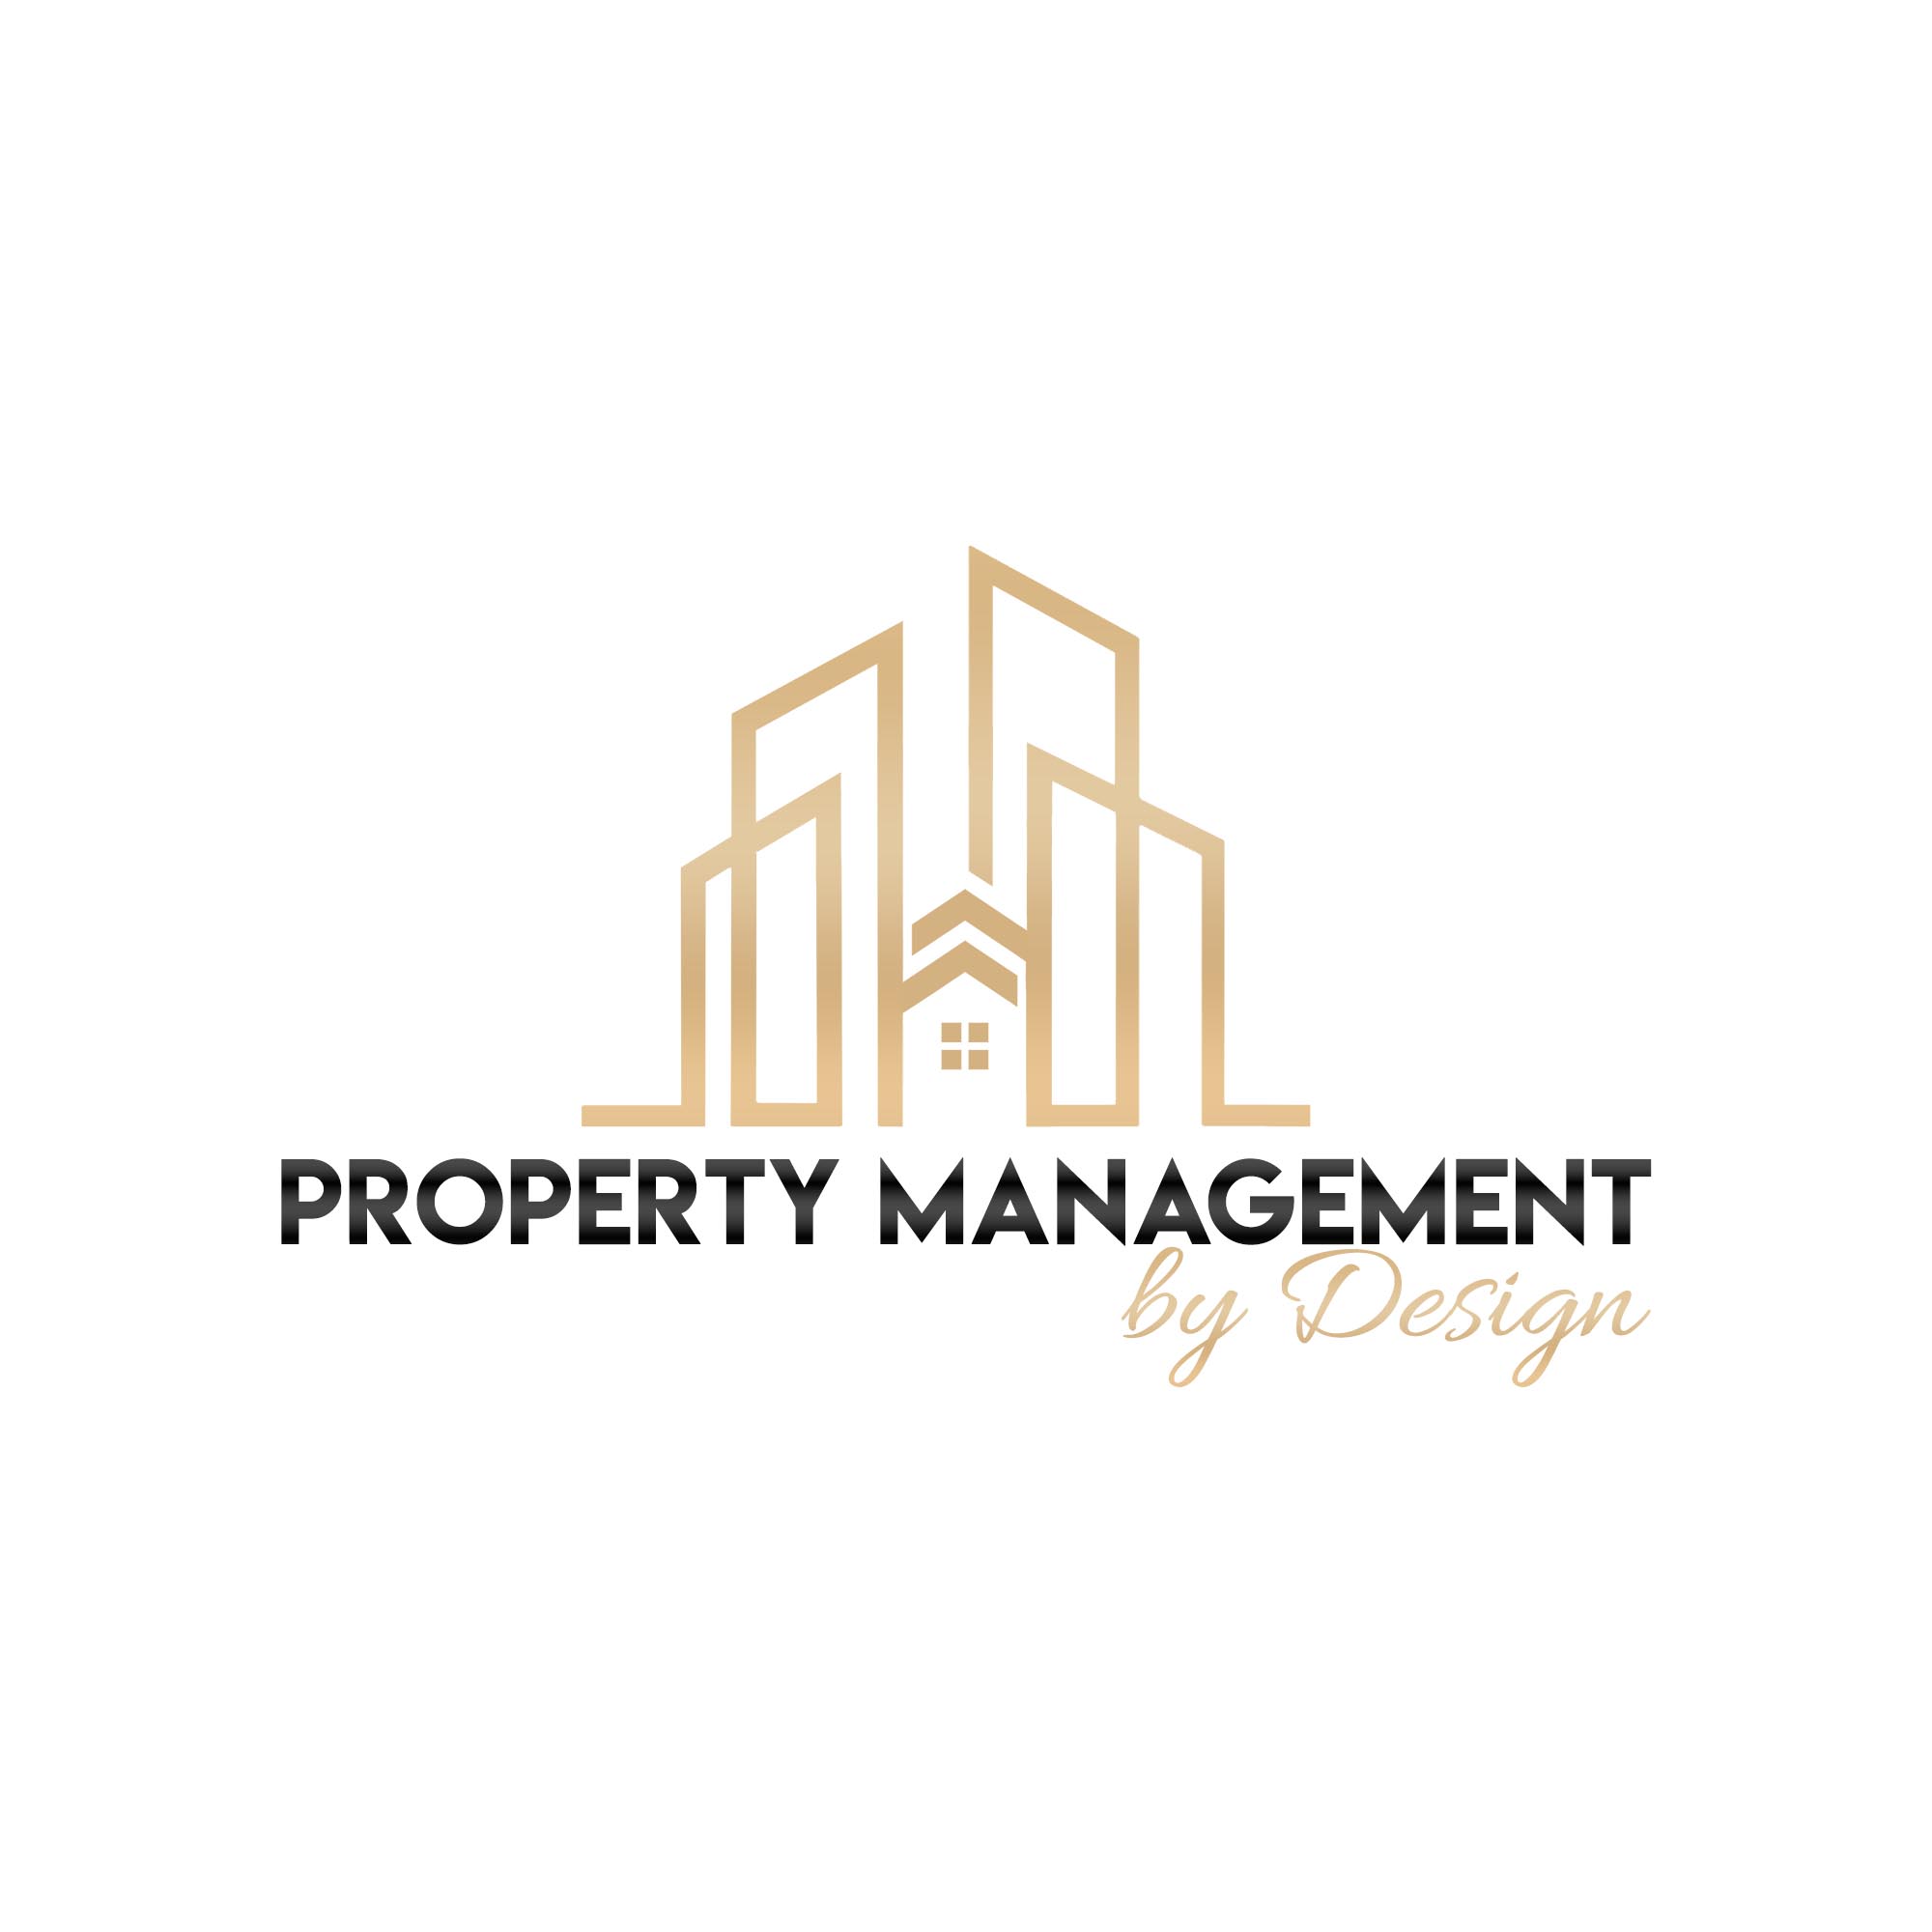 Property Management by Design logo